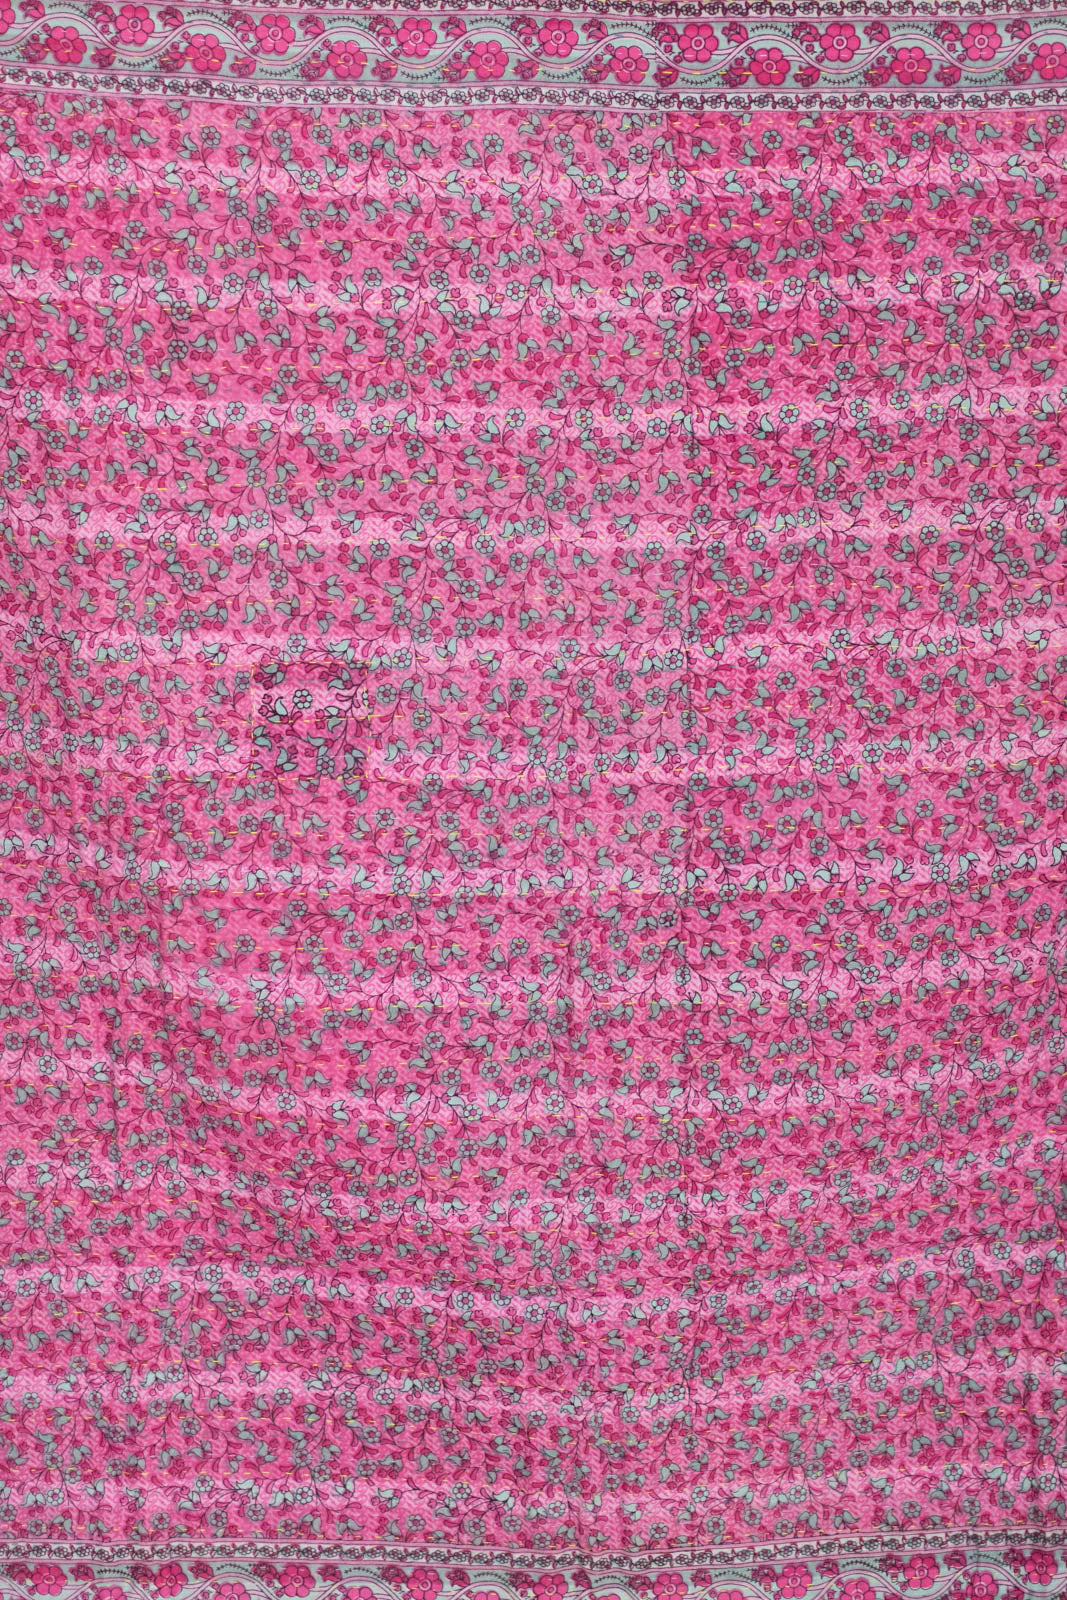 Tiny No. 1 Kantha Mini Blanket